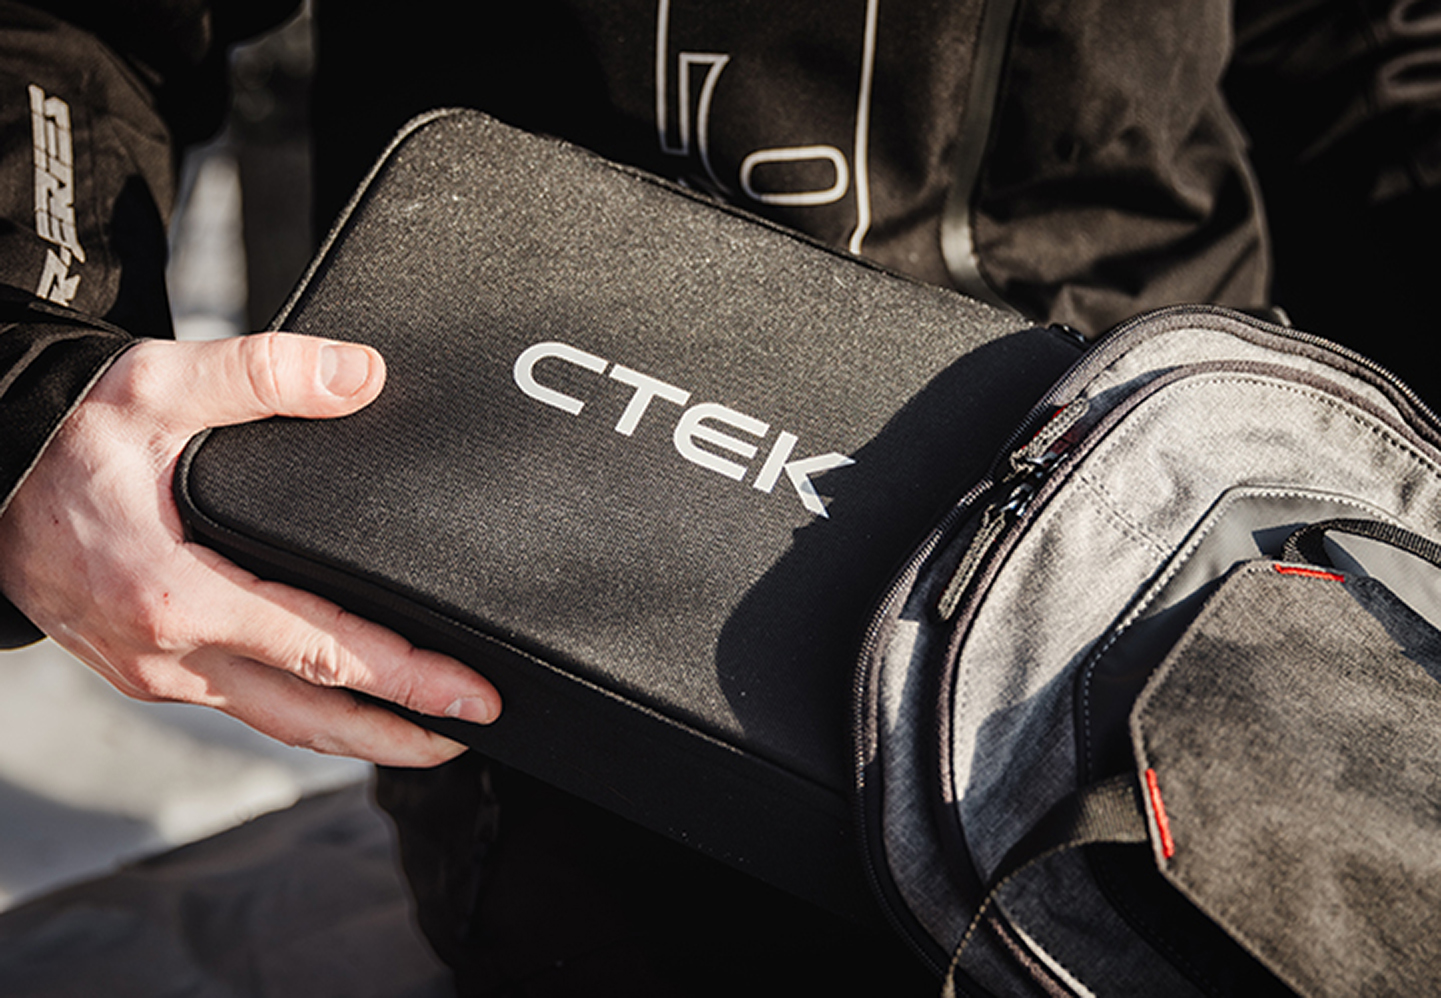 CTEK CS FREE Caricabatterie portatile multifunzionale 4 in 1 da 12 V con tecnologia Adaptive Boost, Codice: 40-462 - ctek.com